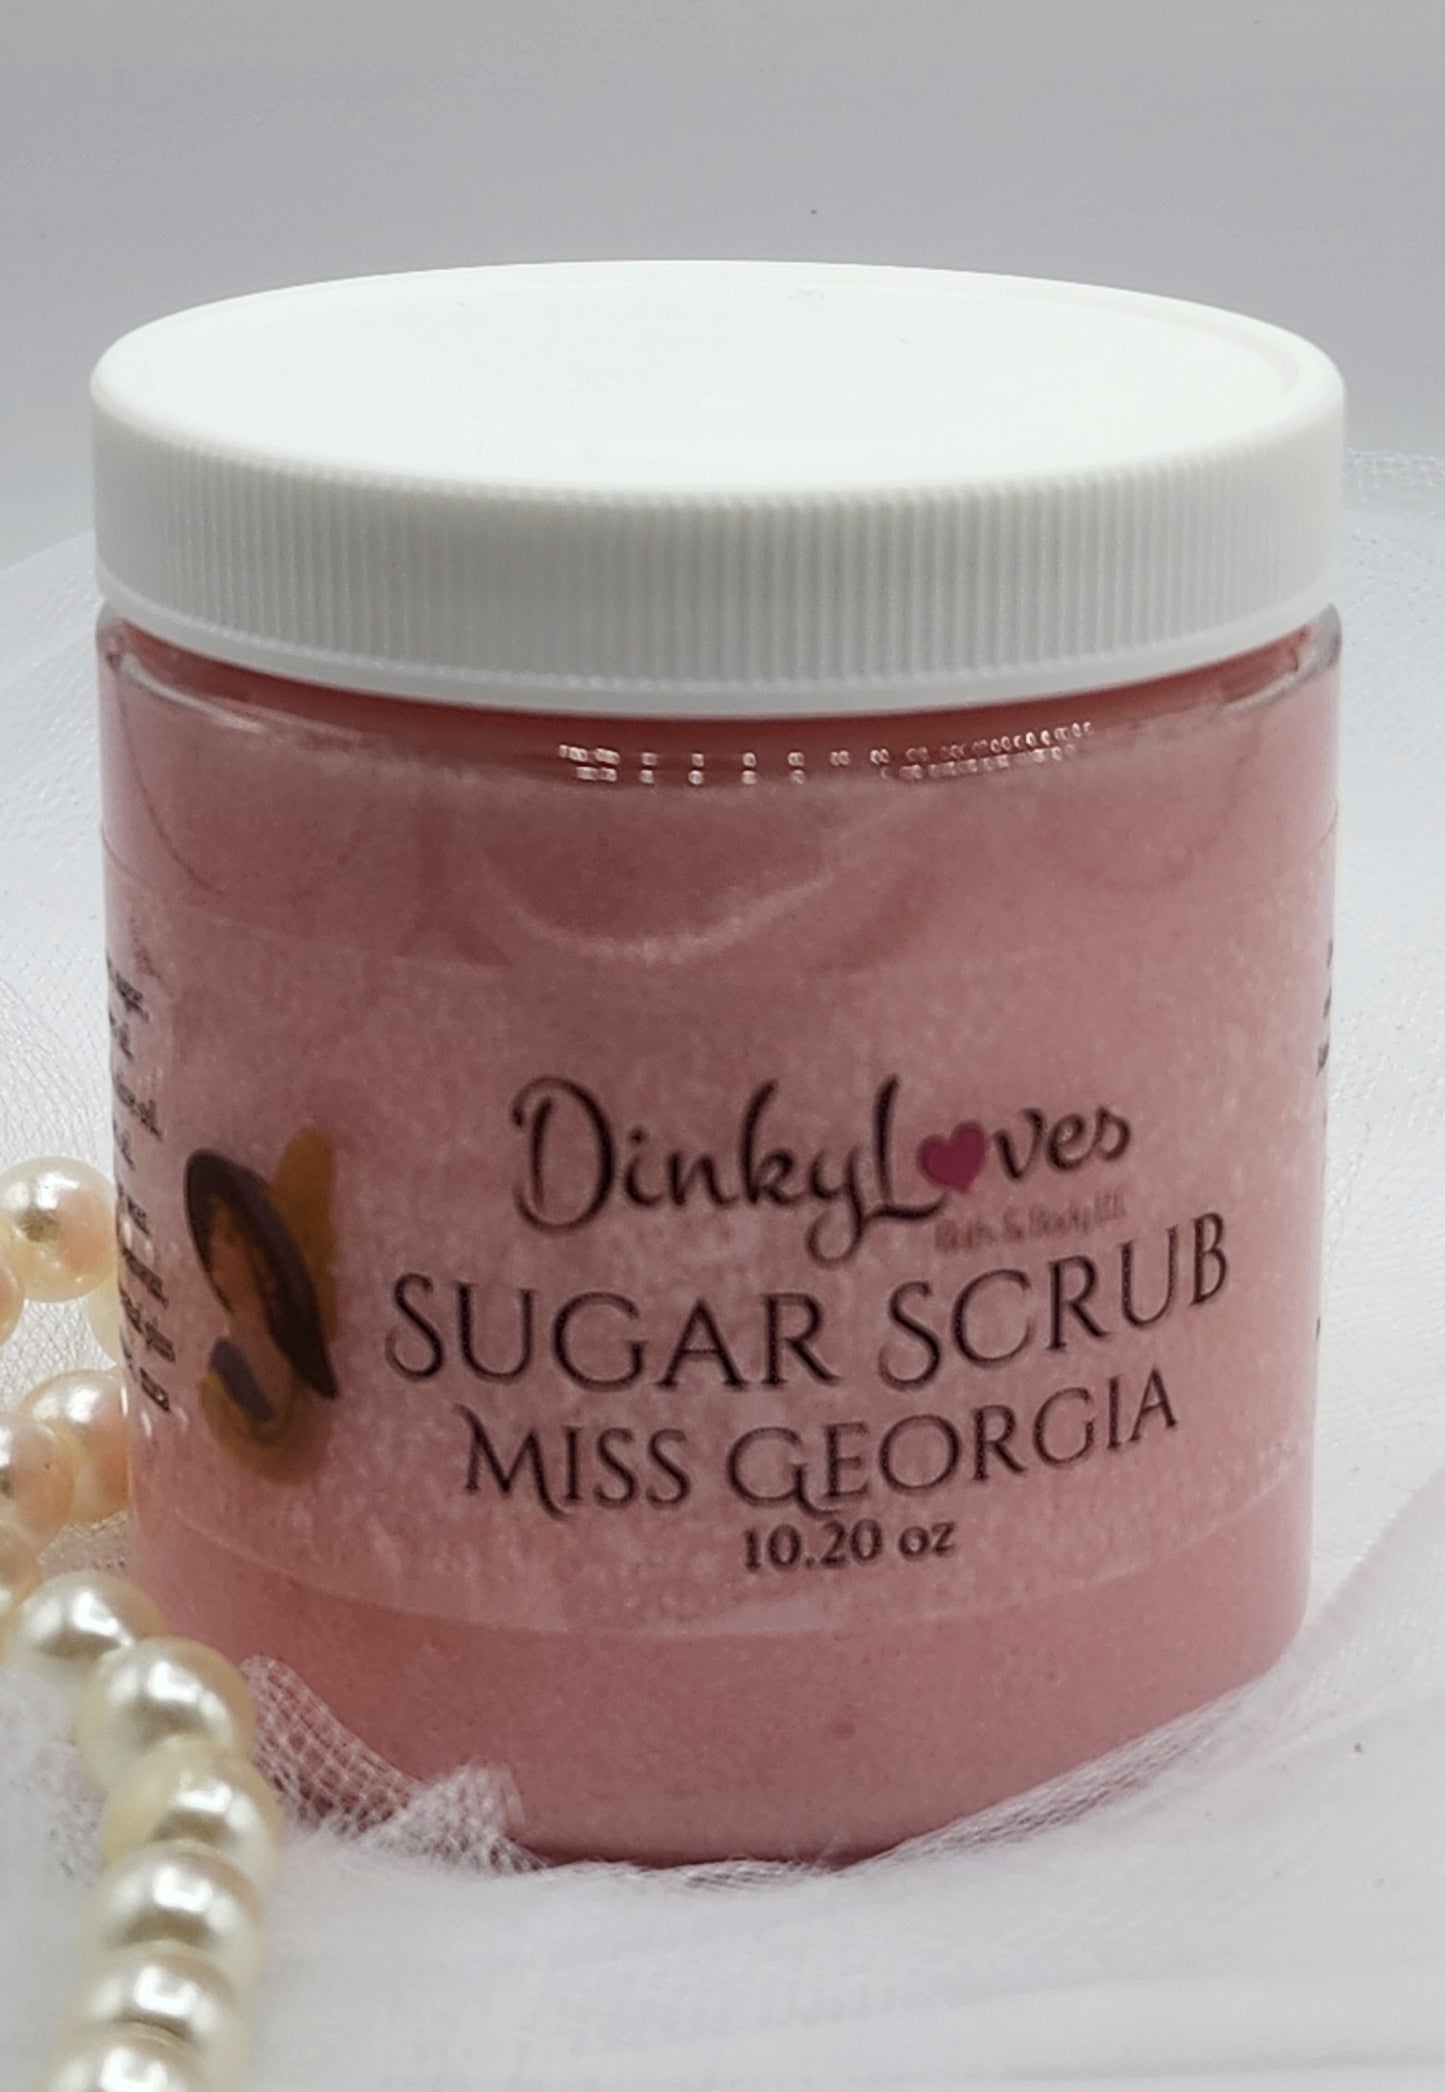 MISS GEORGIA / Sugar Scrub / Unique Gift Idea / Handmade Sugar Scrub